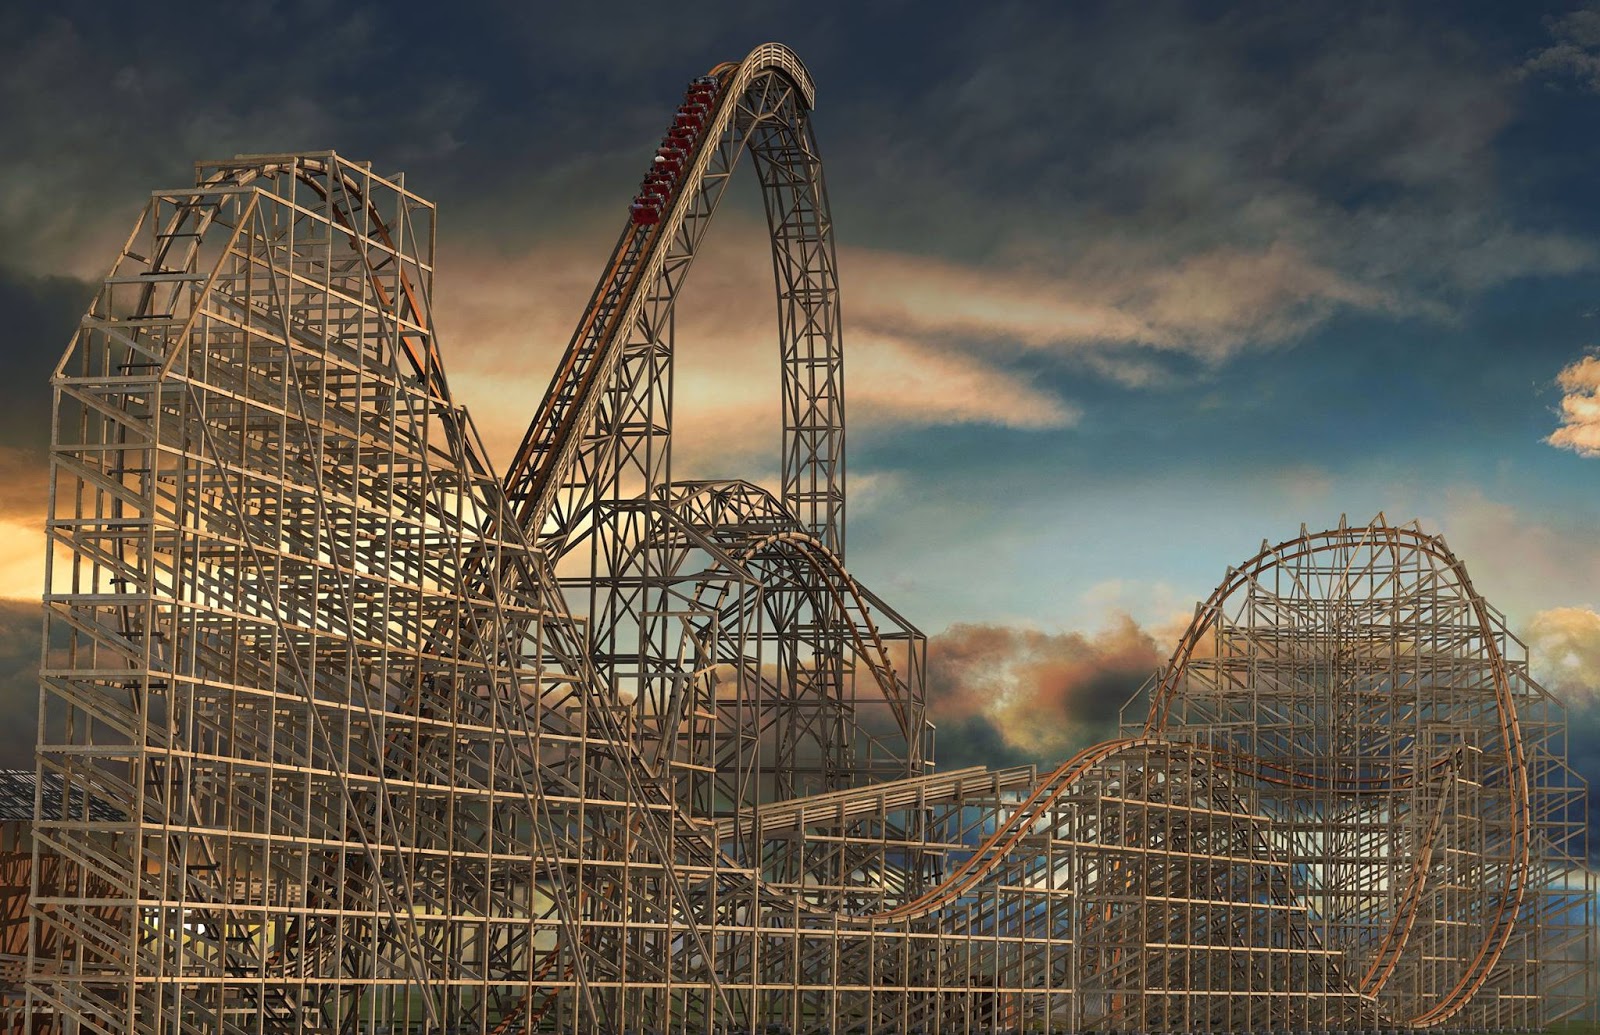 The Beast, world's longest wooden roller coaster, is getting longer